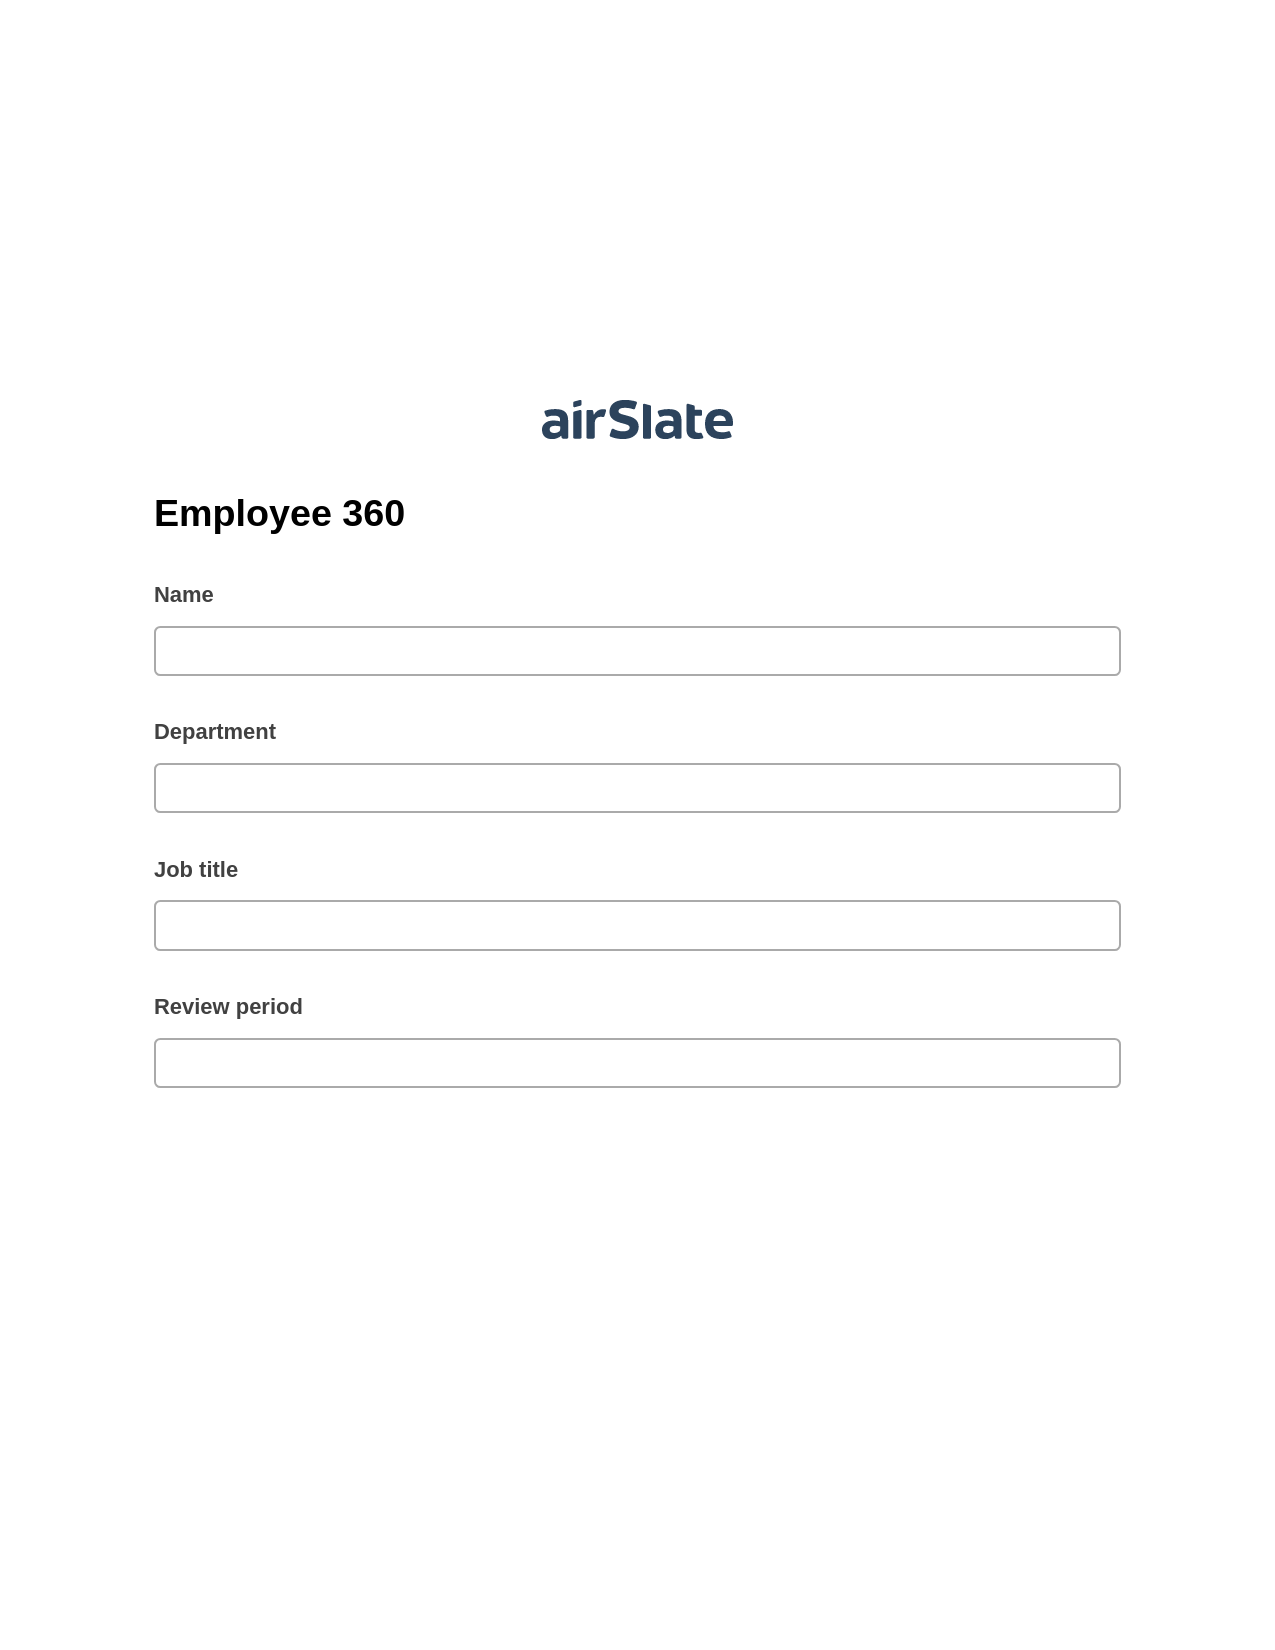 Employee 360 Prefill from NetSuite records, Google Calendar Bot, Slack Notification Postfinish Bot